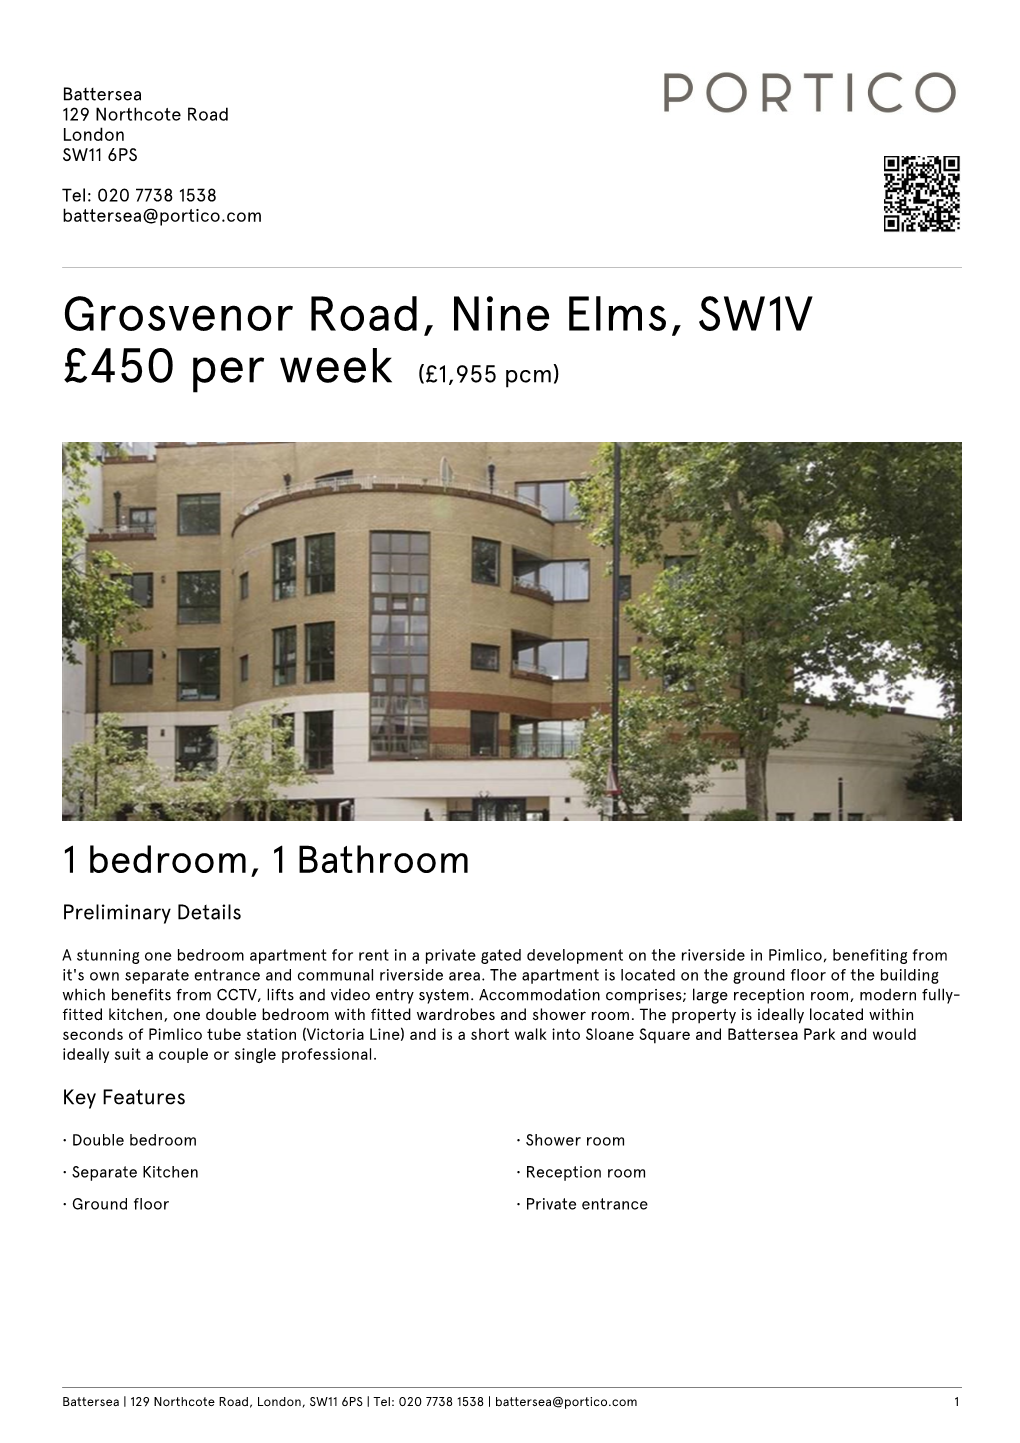 Grosvenor Road, Nine Elms, SW1V £450 Per Week (£1955